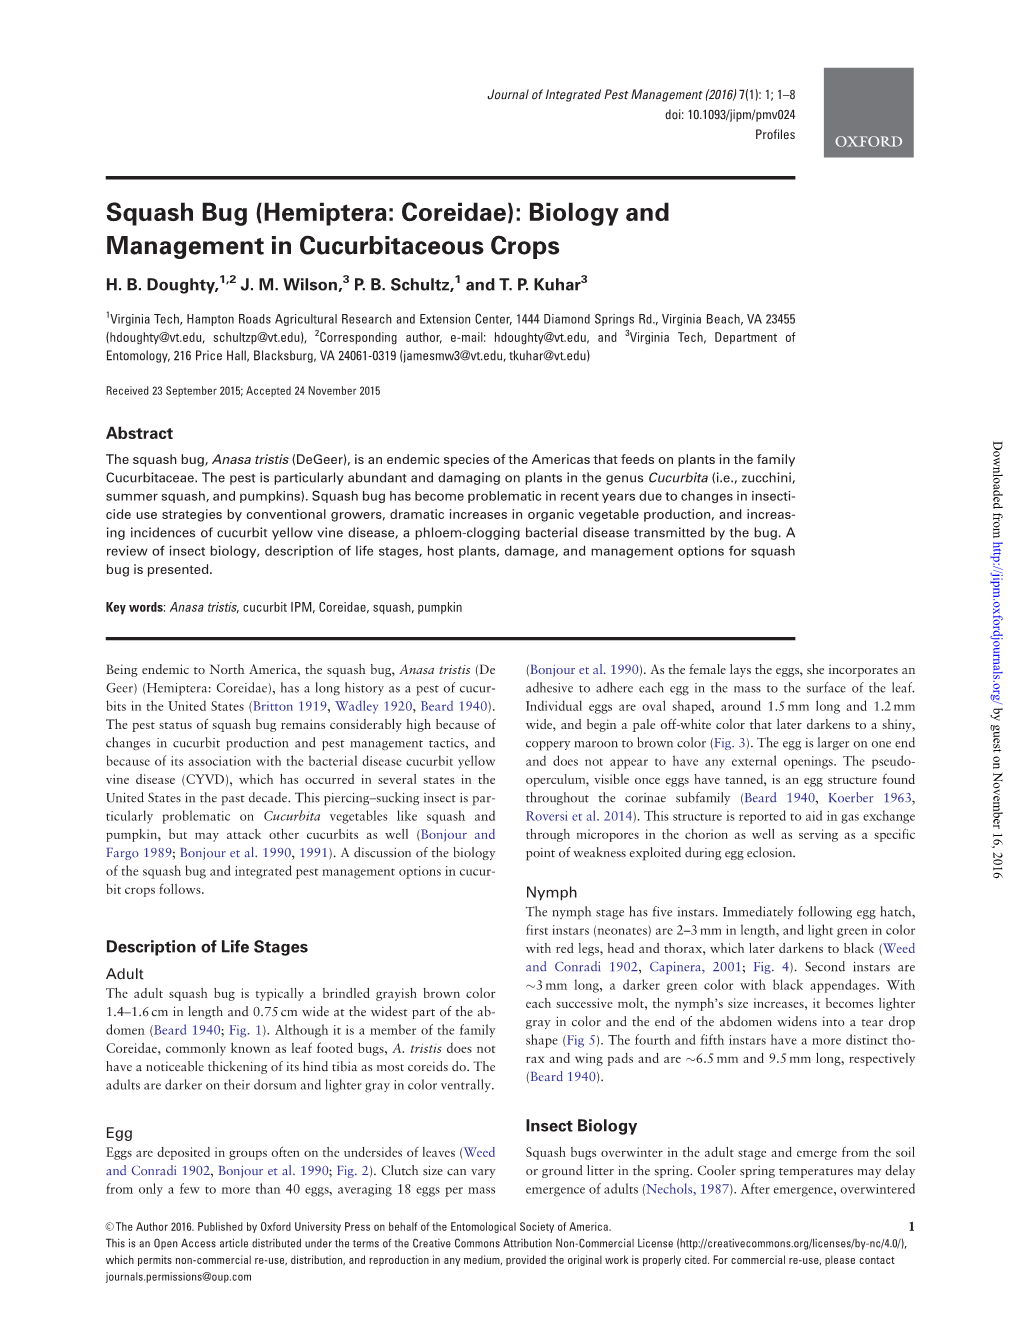 Squash Bug (Hemiptera: Coreidae): Biology and Management in Cucurbitaceous Crops